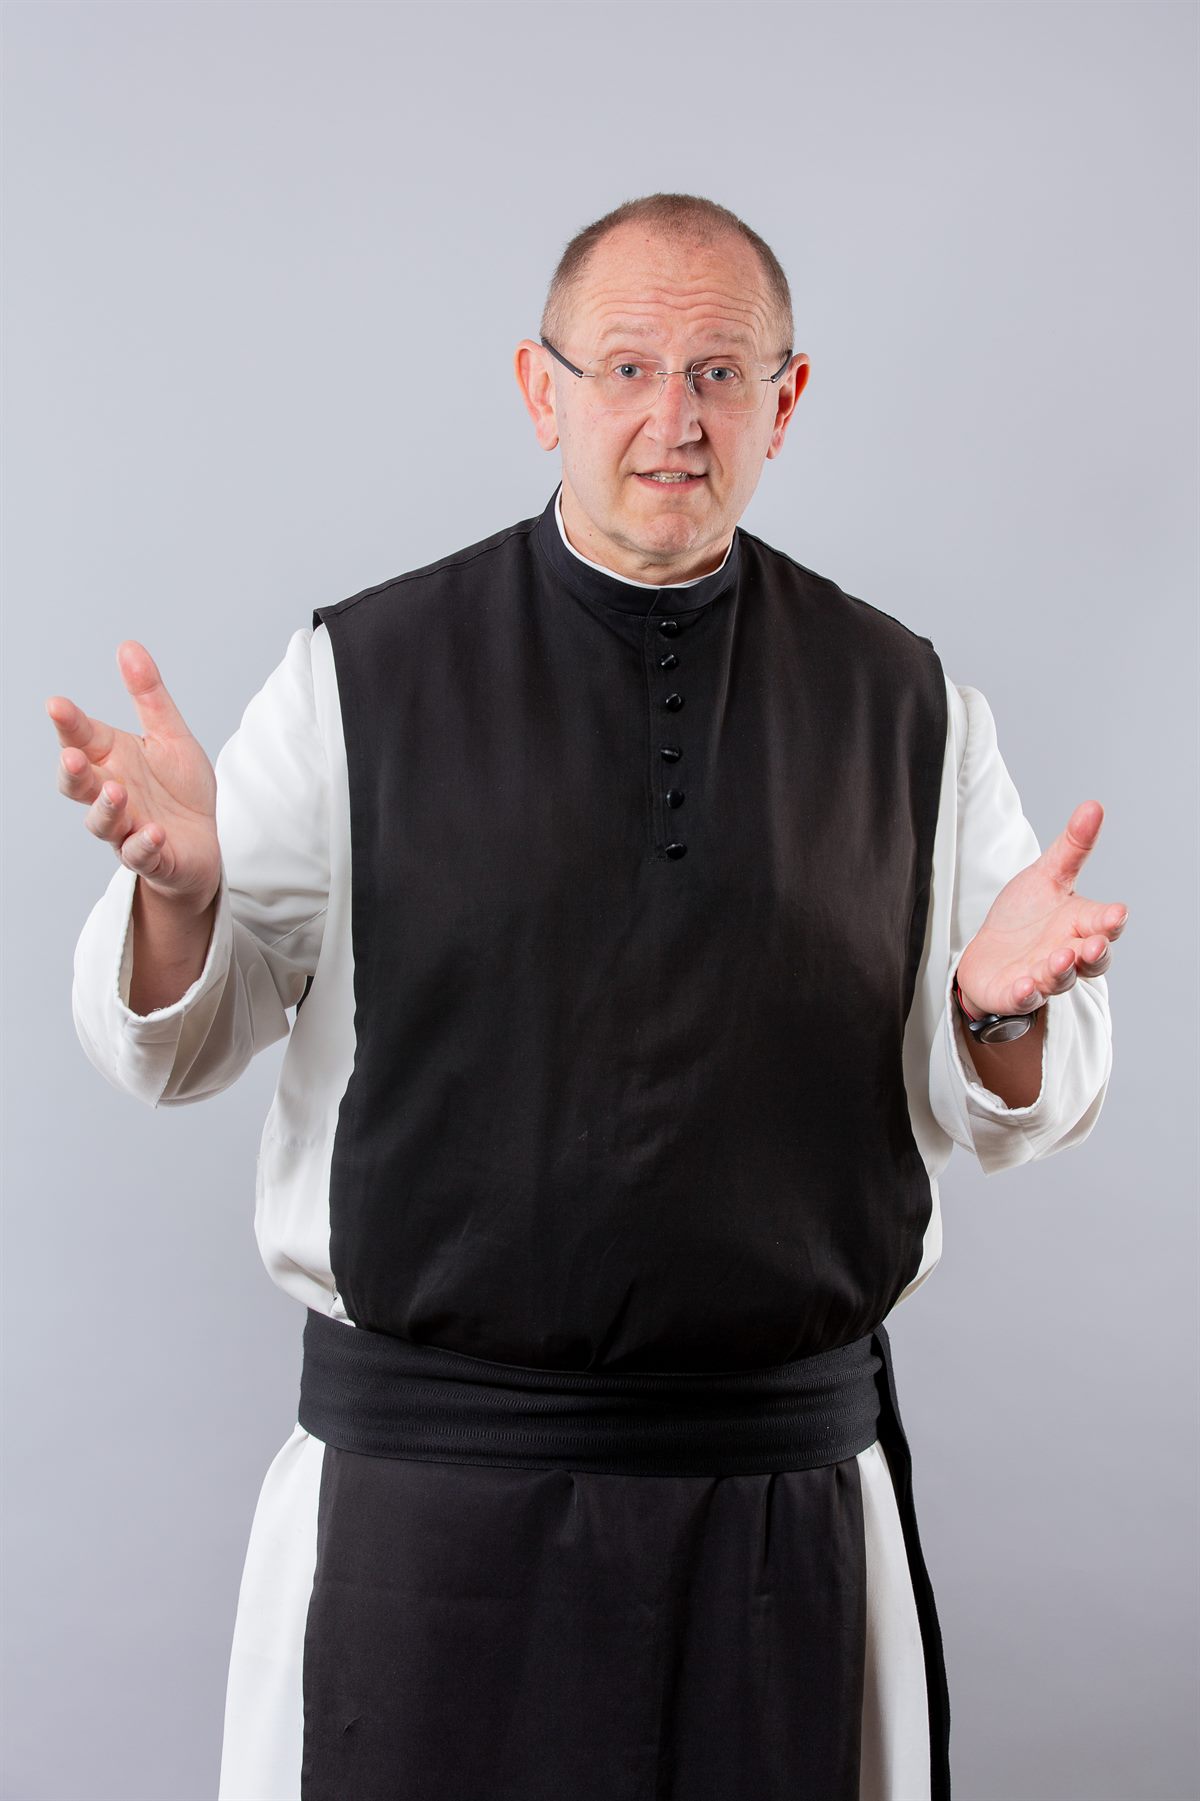 Missio-Nationaldirektor Pater Karl Wallner